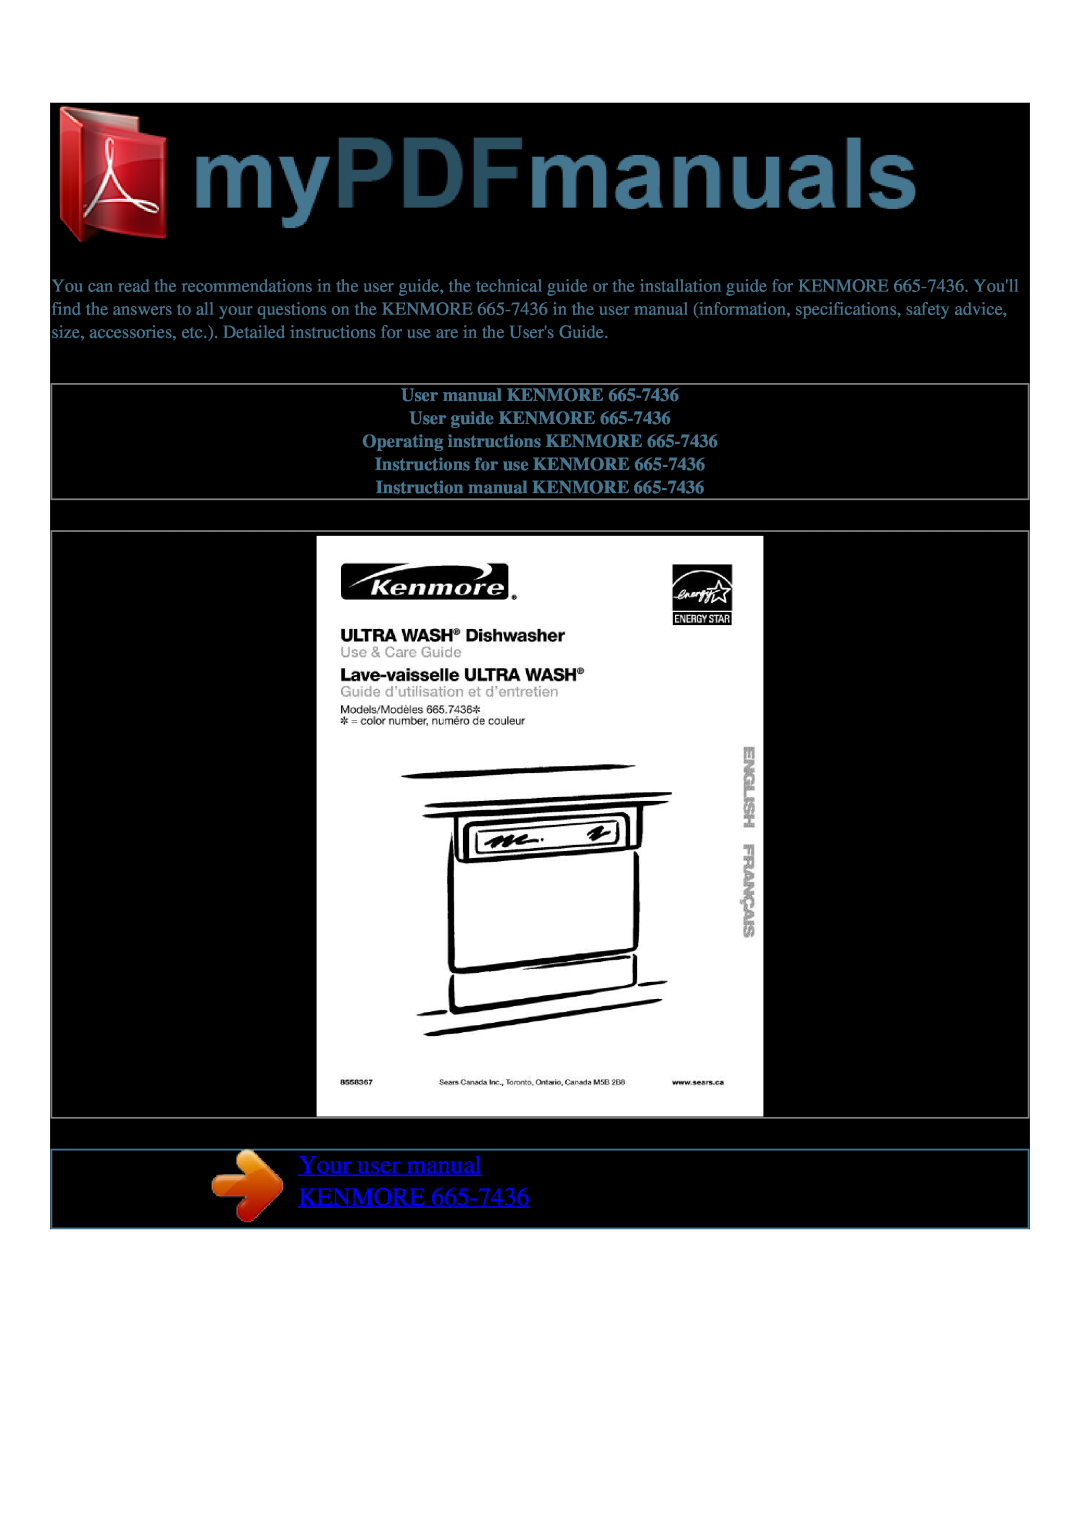 Kenmore 665-7436 user manual Operating instructions KENMORE, Instructions for use KENMORE 